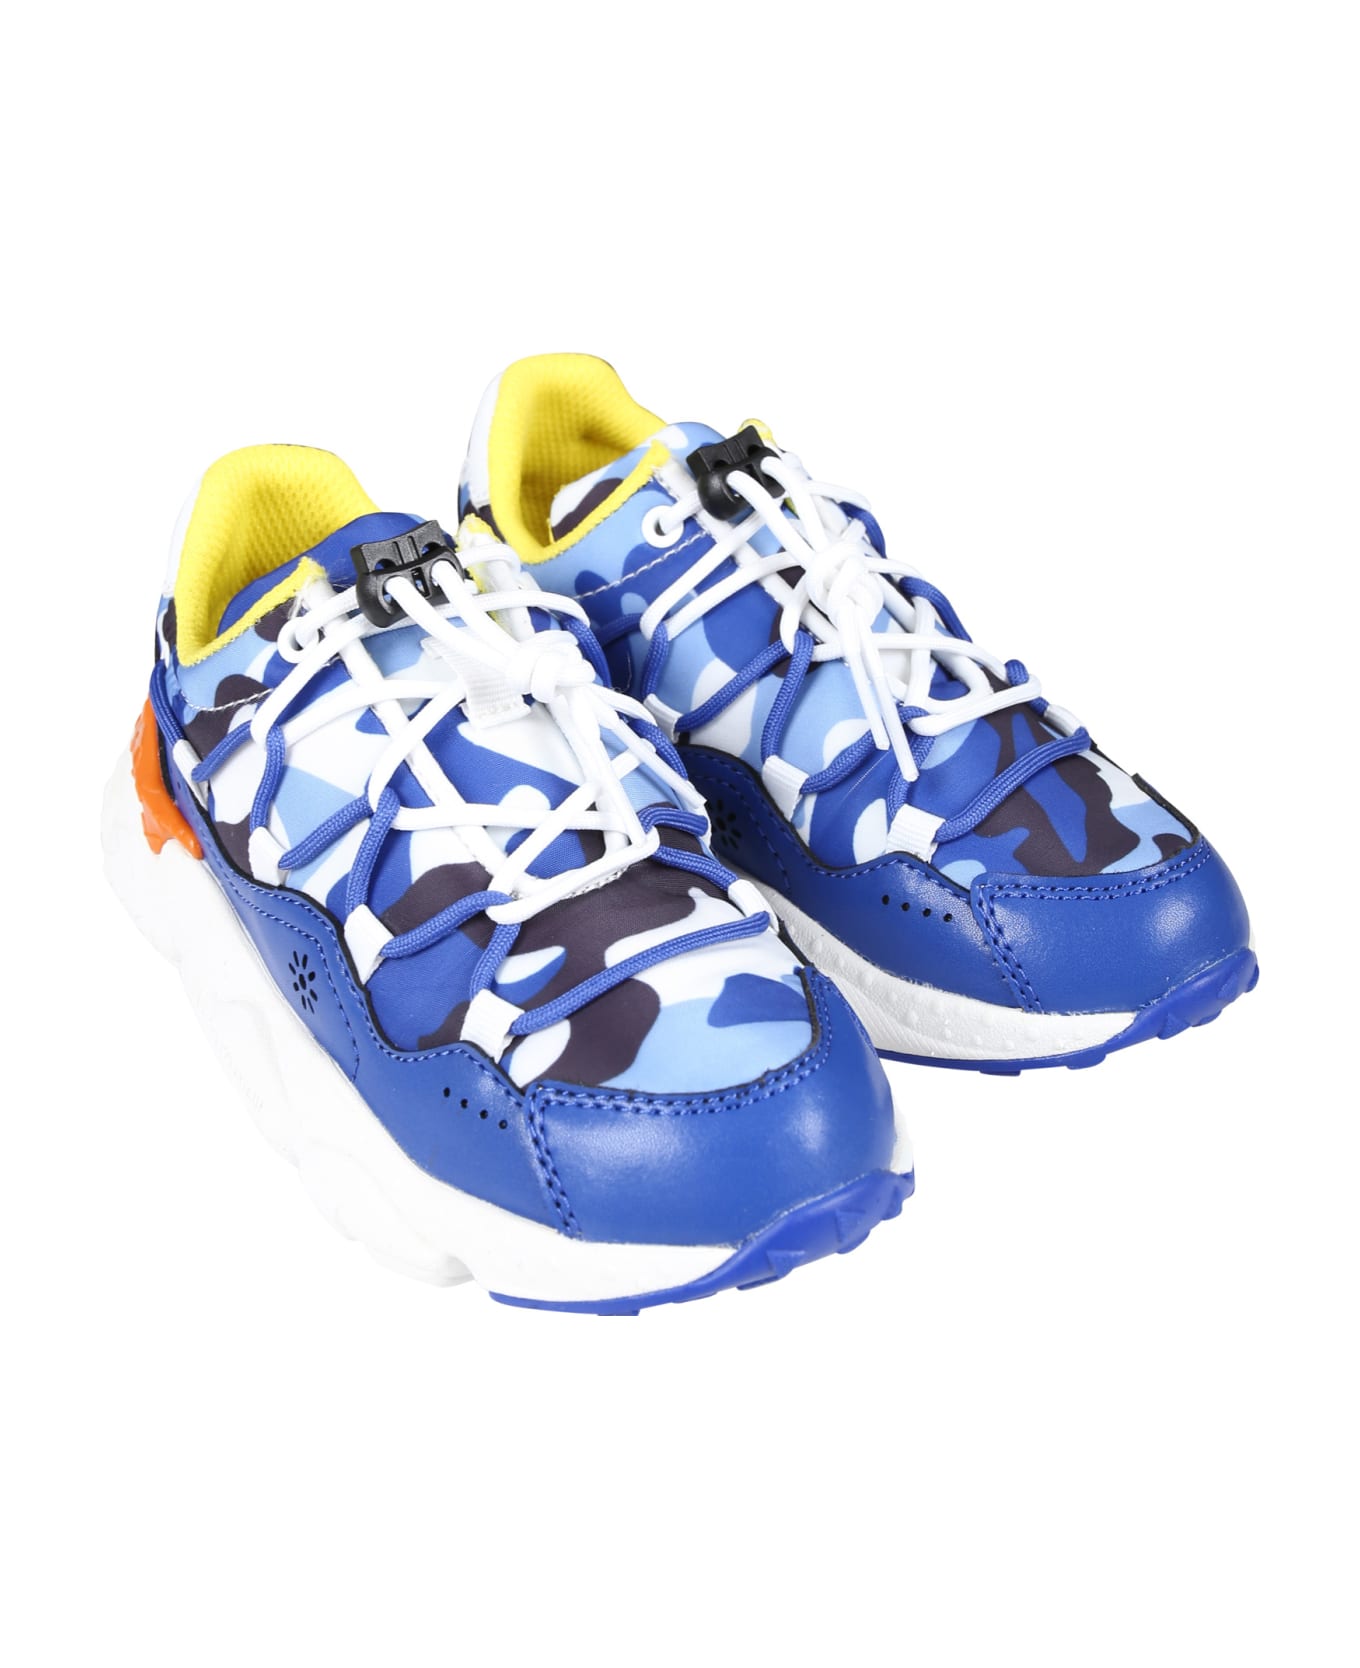 Flower Mountain Blue Raikiri Sneakers For Boy - Blue シューズ